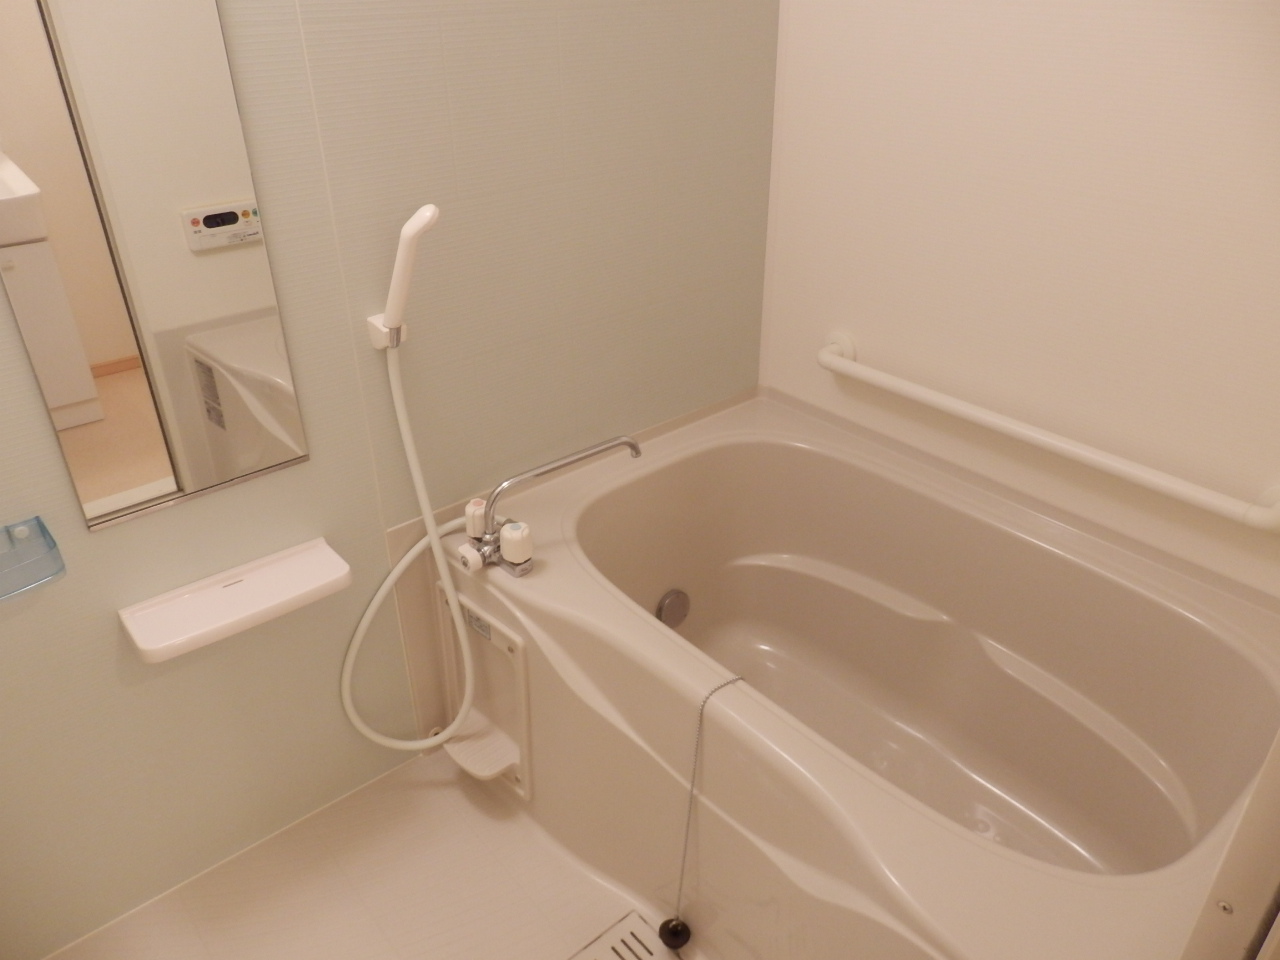 Bath. Bathroom ventilation dryer. With reheating function ☆